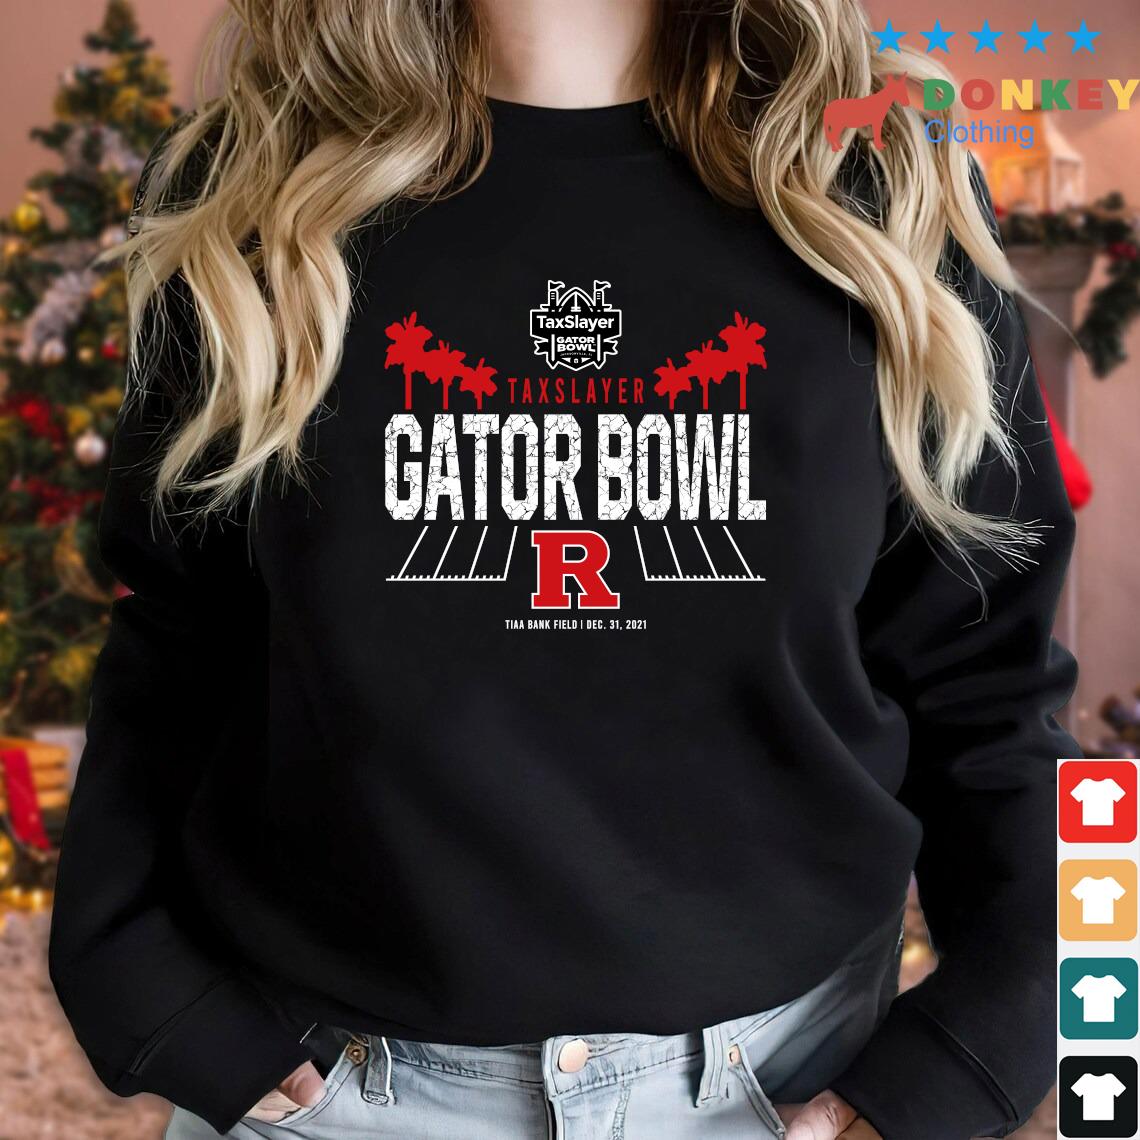 Rutgers Scarlet Knights Taxslayer Gator Bowl 2021 Men's Shirt